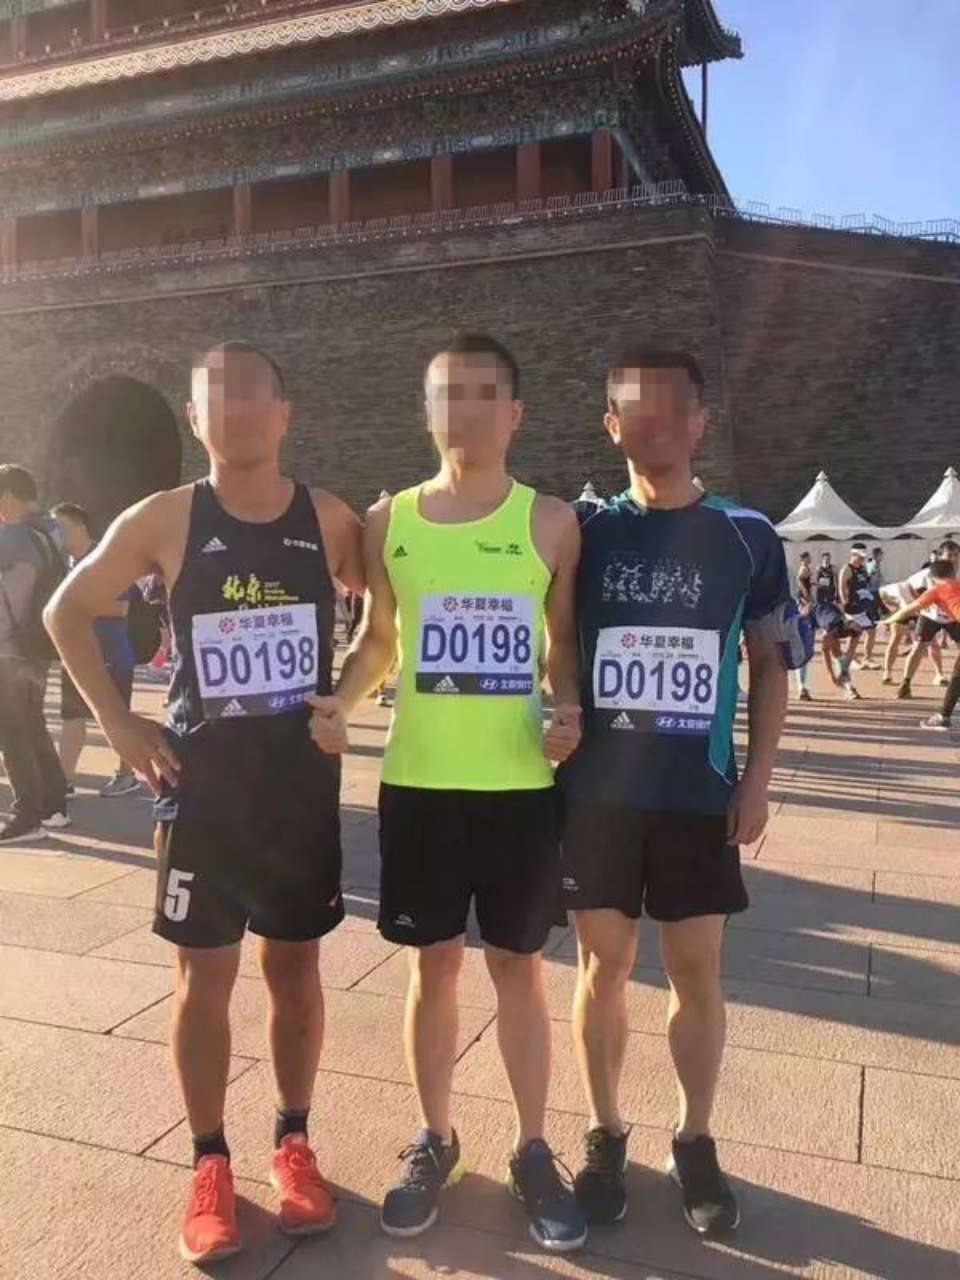 How Runners Run For Free in Beijing Marathon